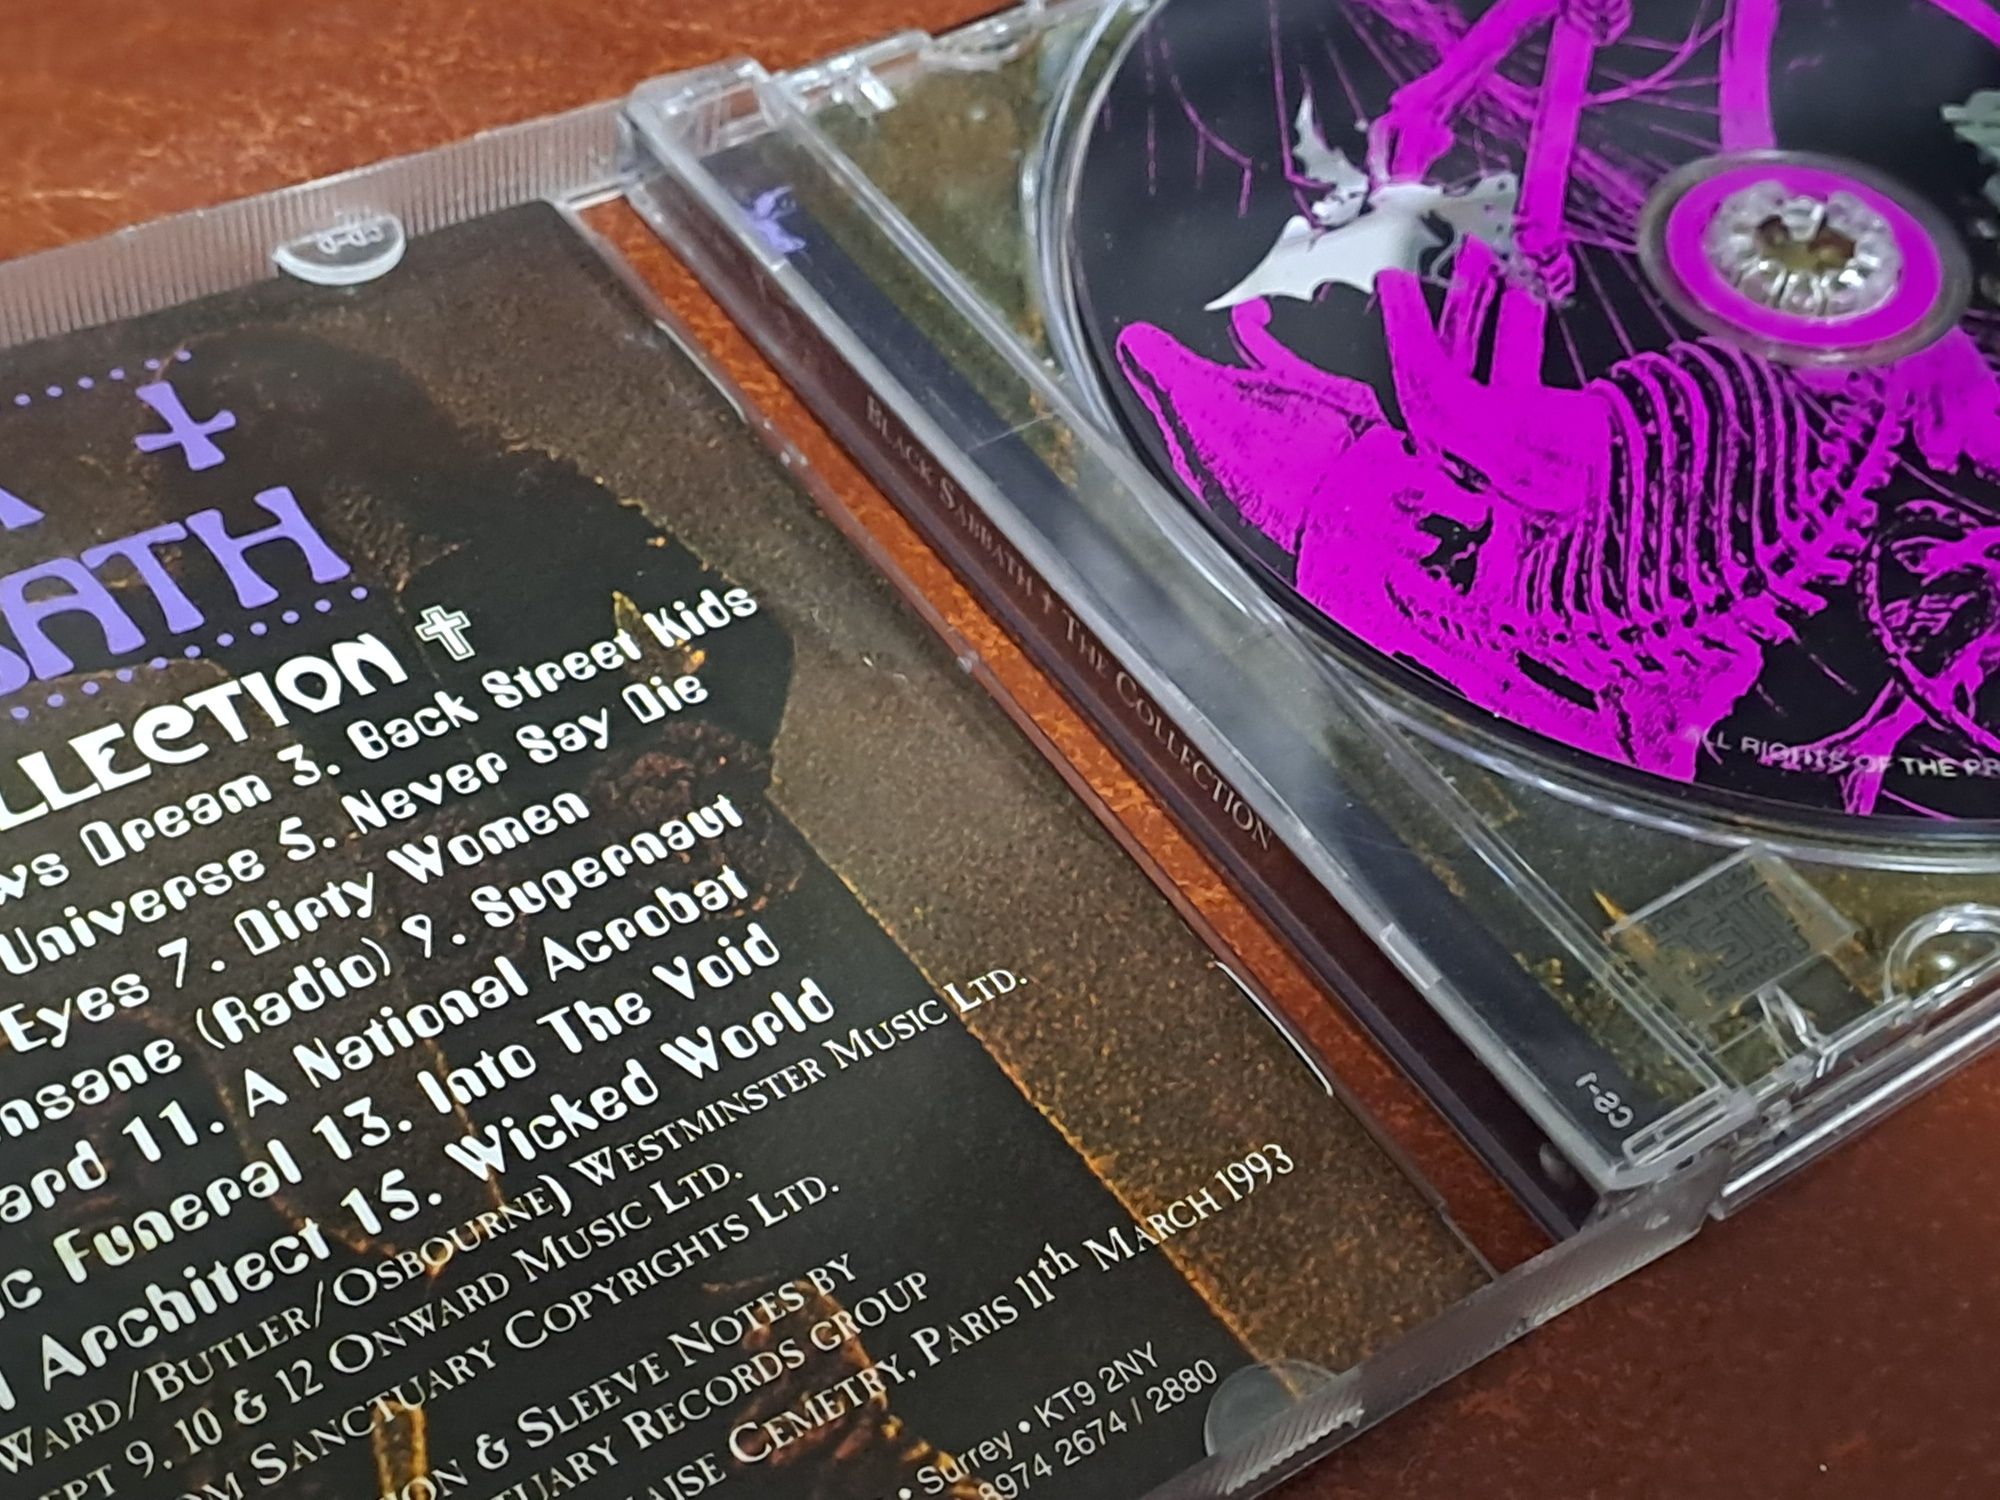 Black Sabbath "The Collection" CD